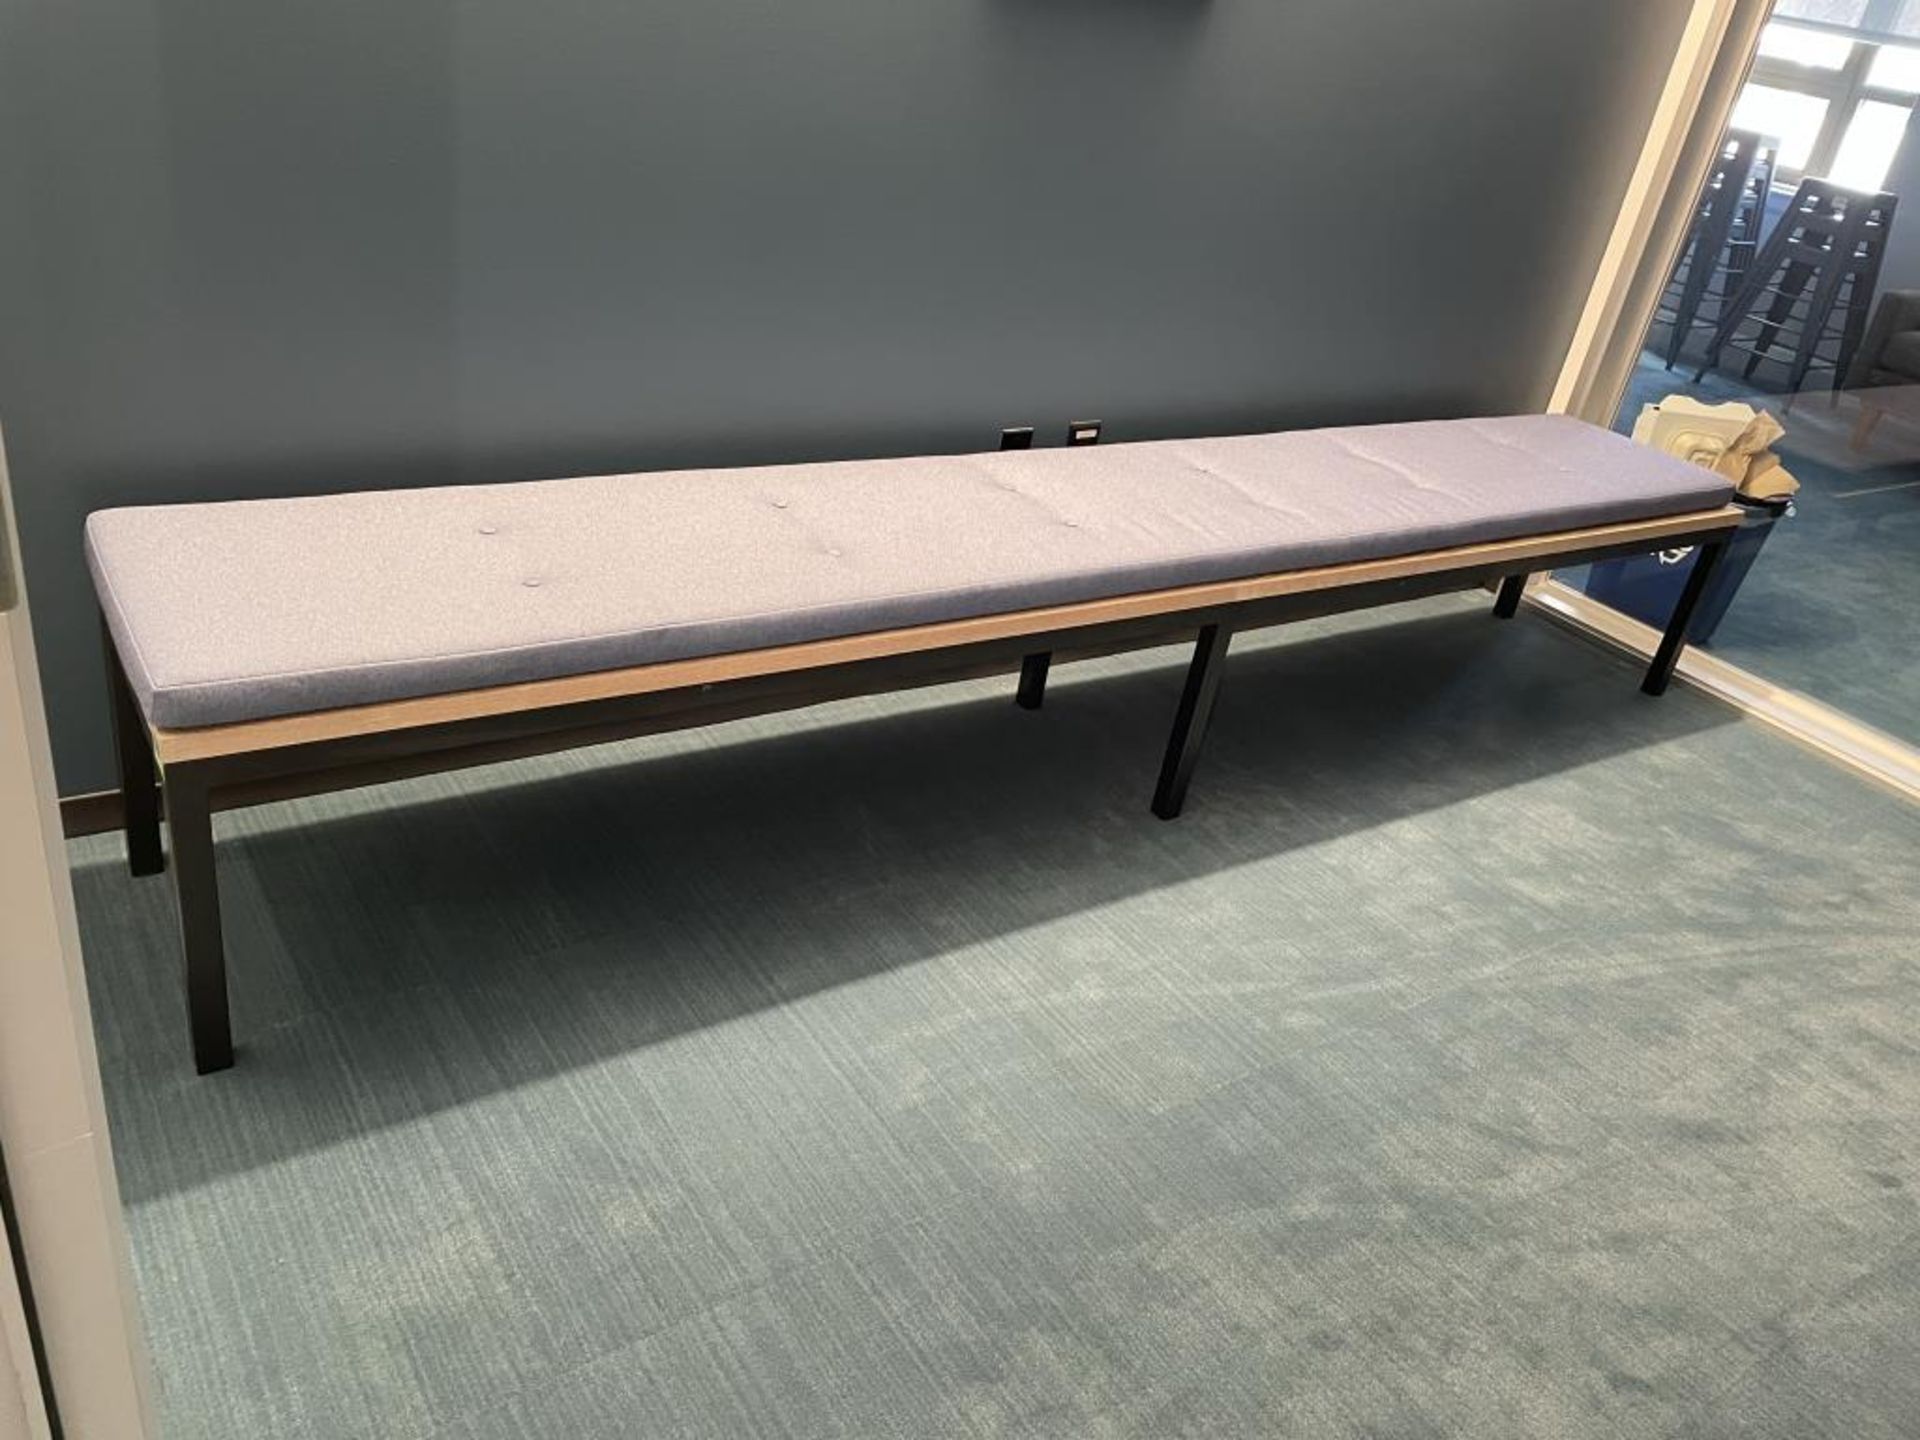 OHIO Design Bench w/ Cushion 120"L